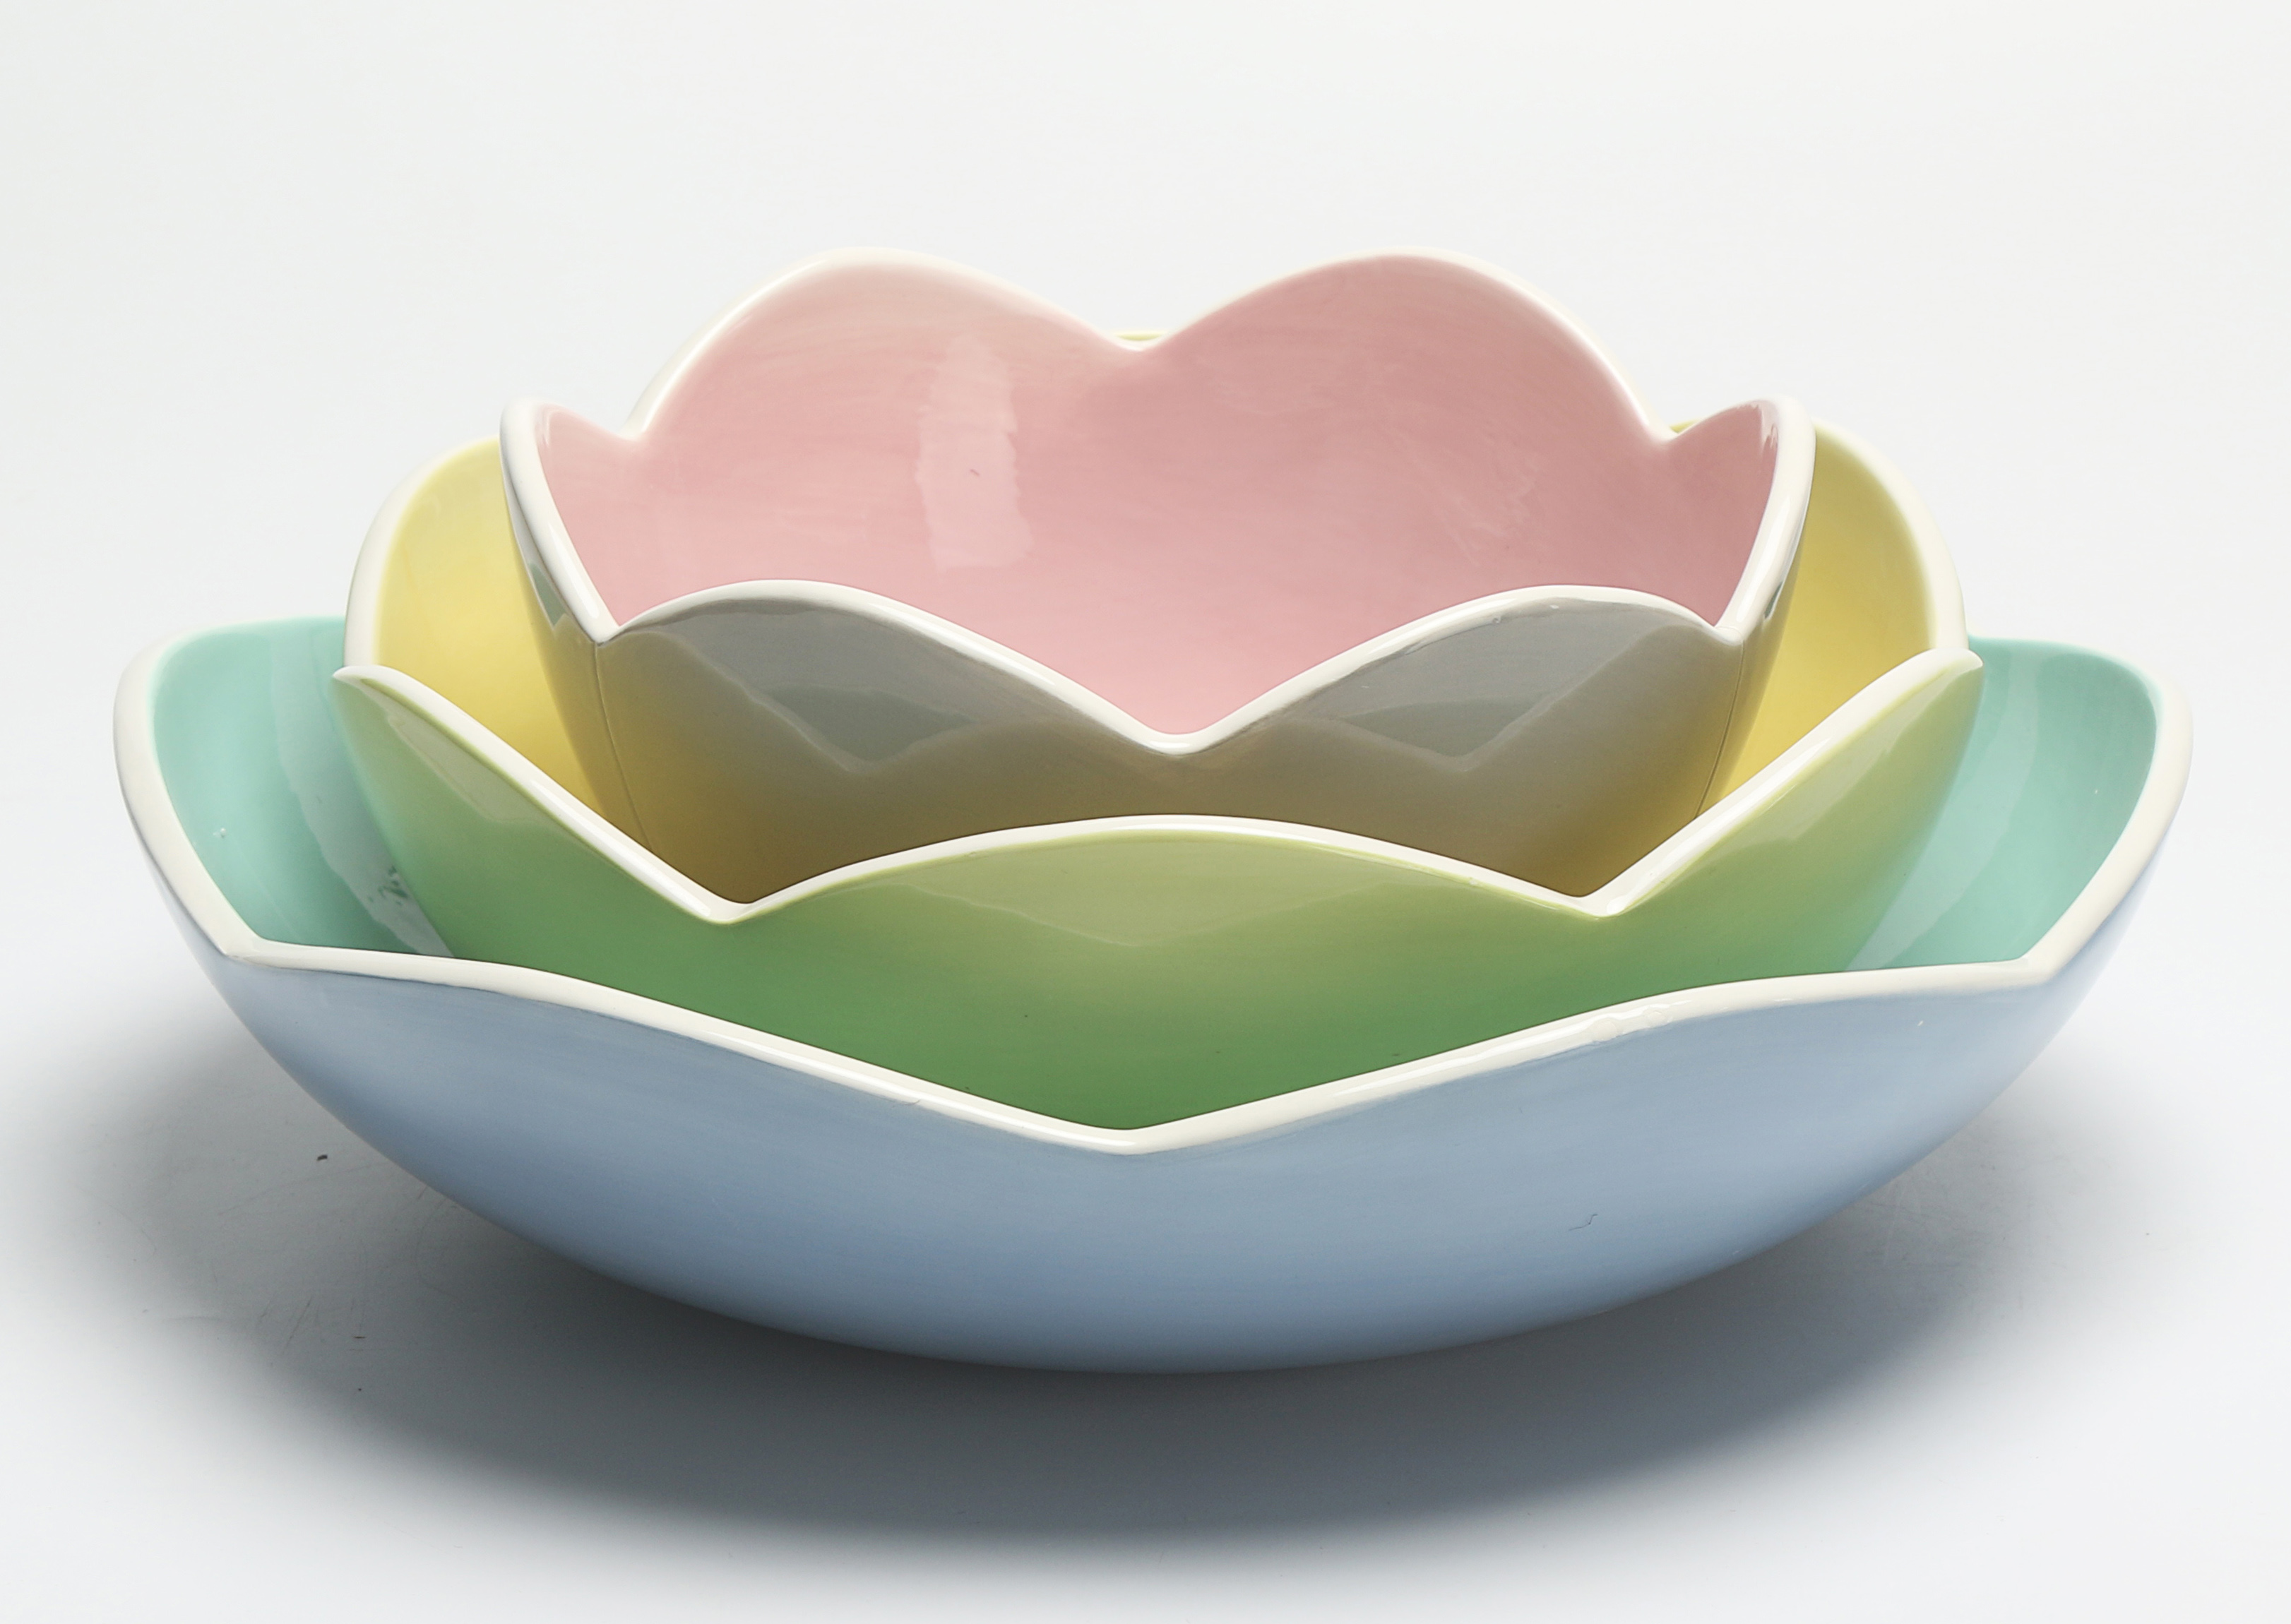 Mainstays Floral Shaped Ceramic Nested Bowl, Set of 3 - image 1 of 5